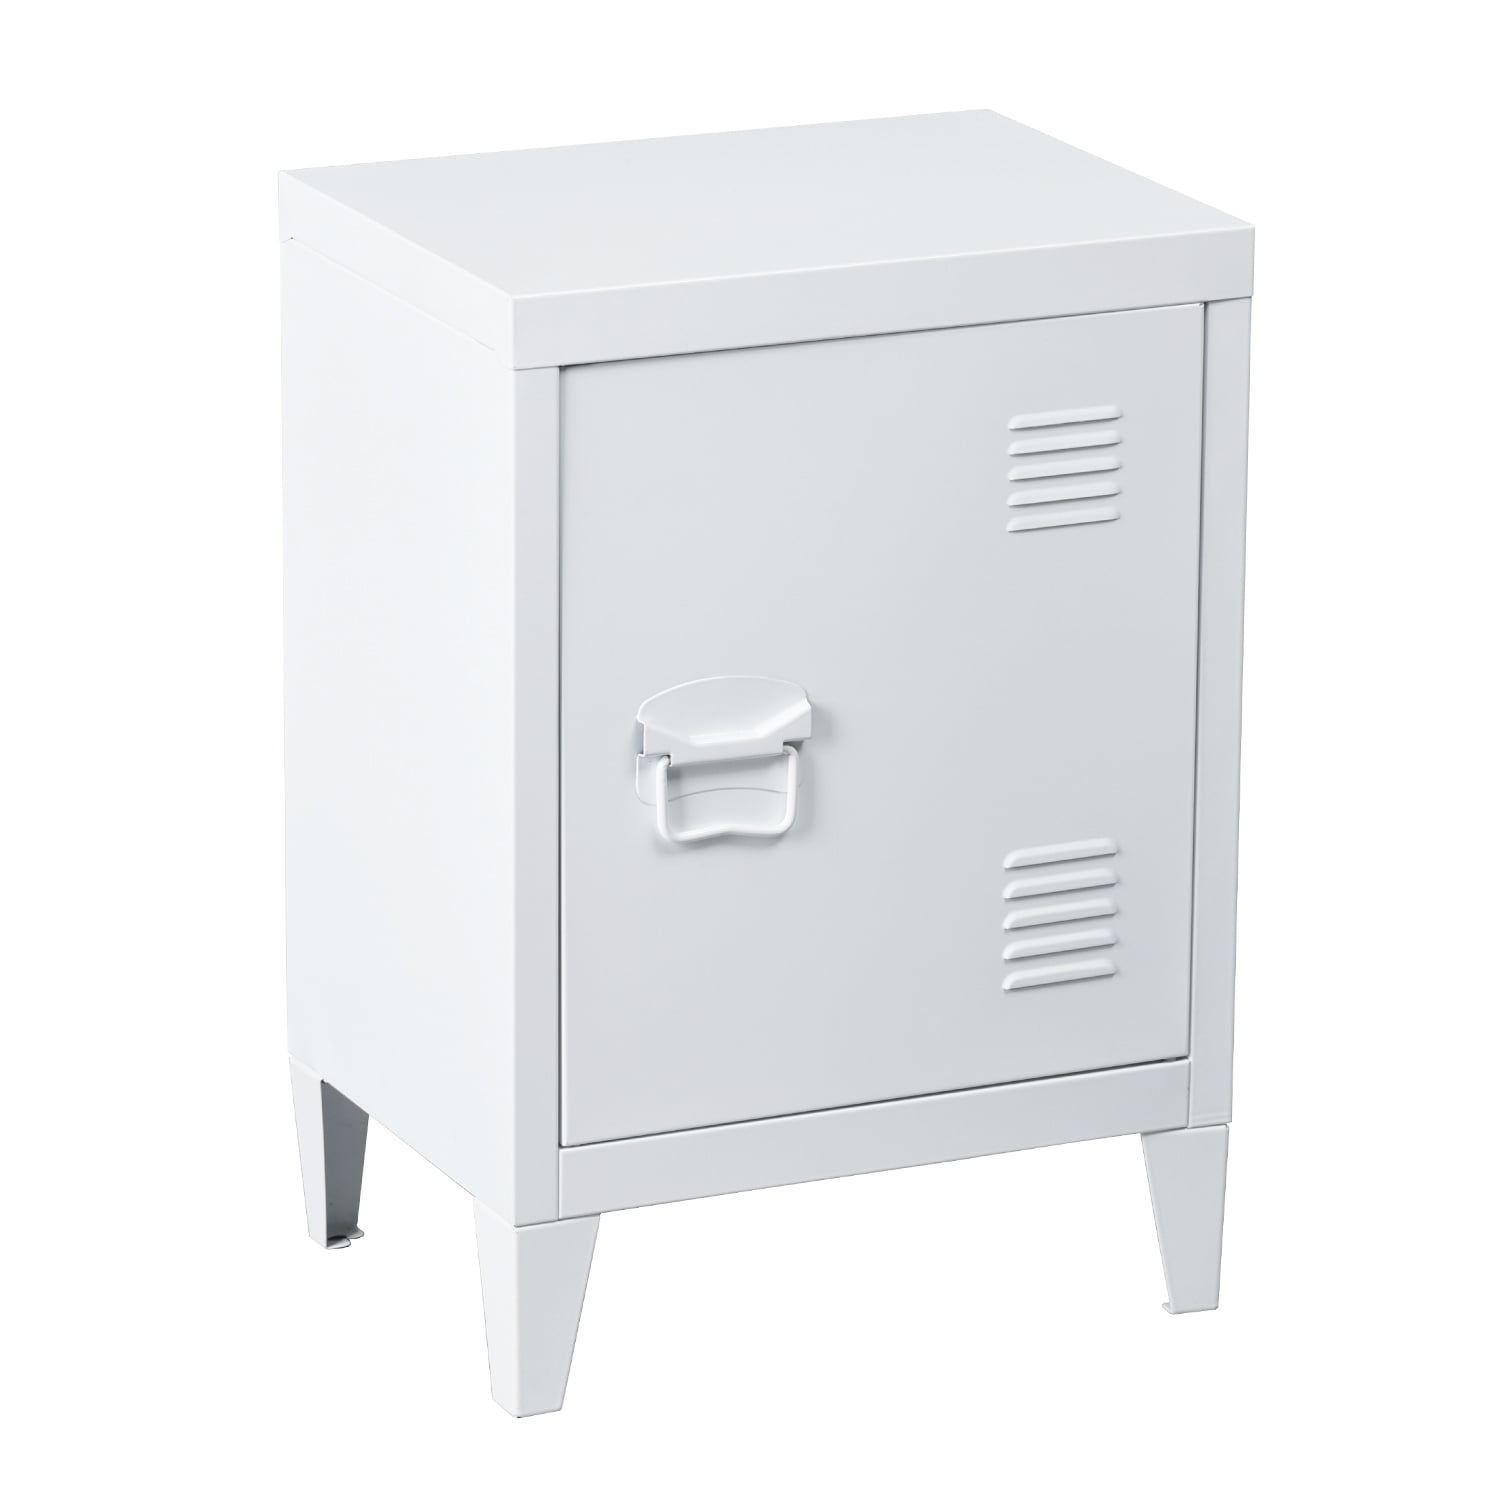 FurnitureR Metal Side End Table Office Low Standing File Organizer Storage Cabinet Cupboard Green